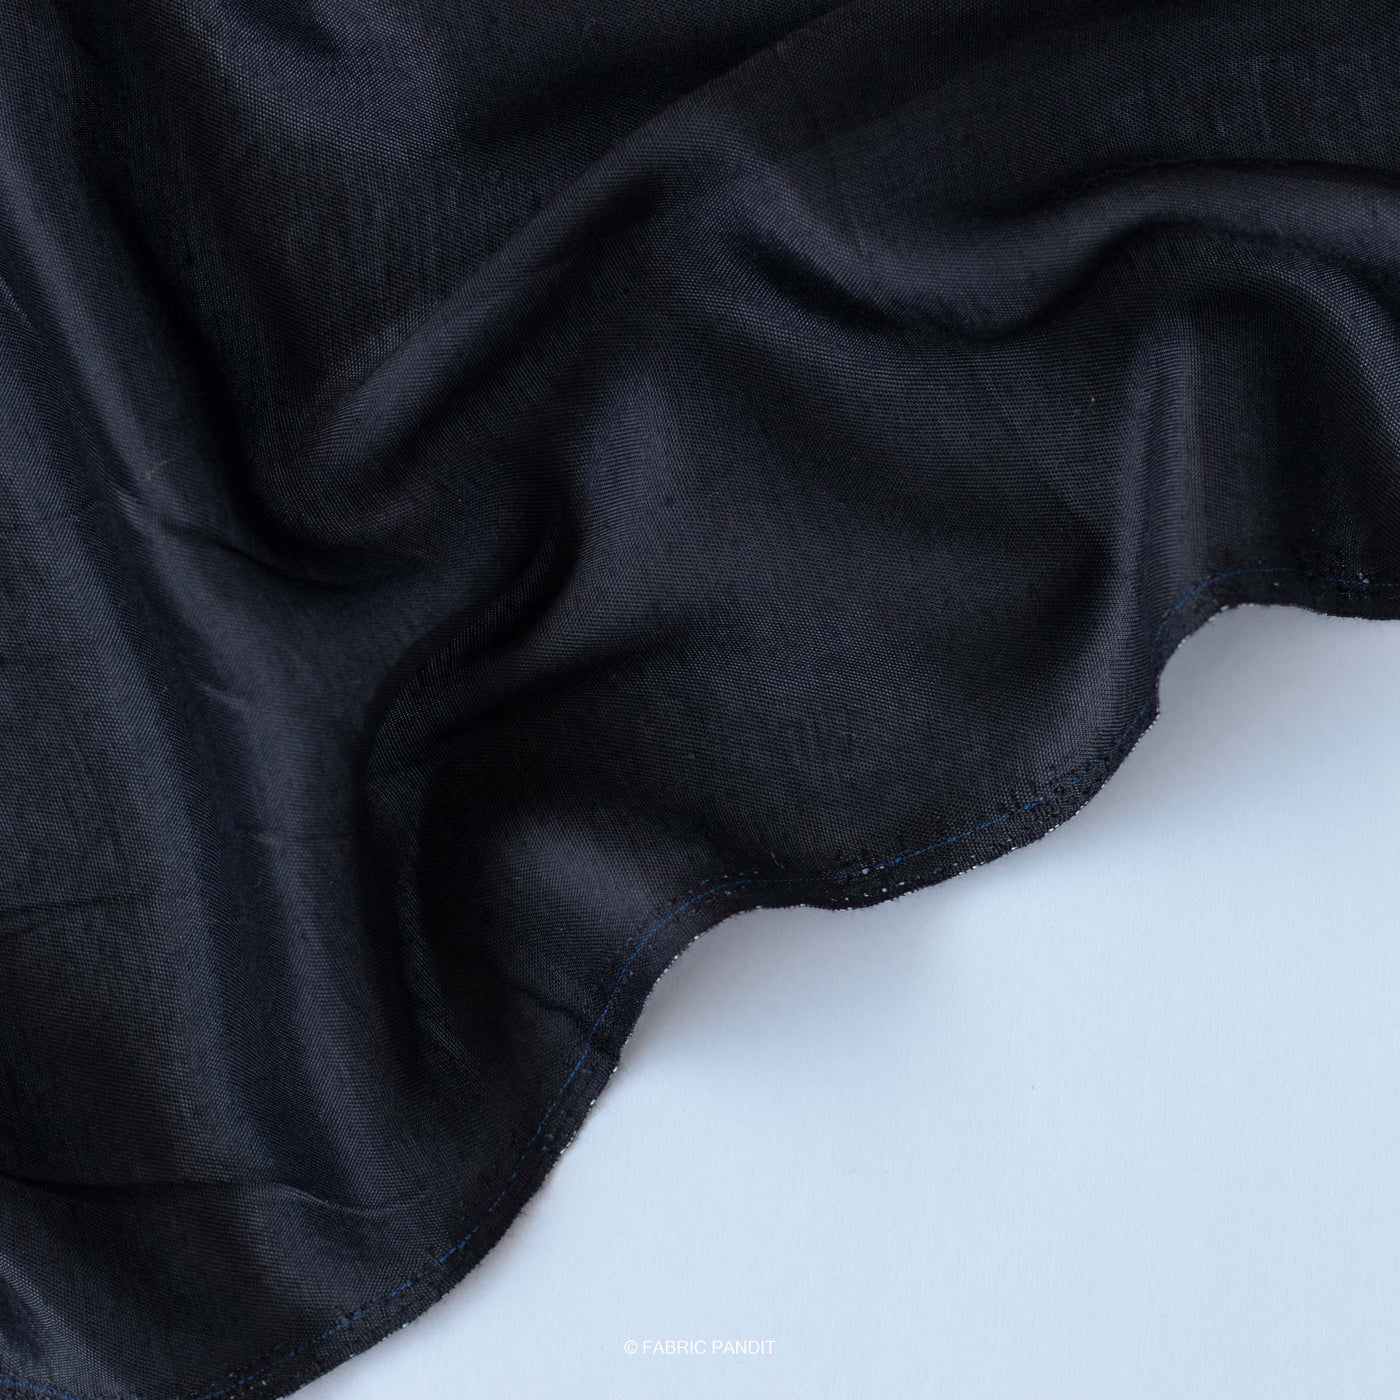 Fabric Pandit Fabric Jade Black Color Viscose Shantoon Fabric (Width 44 Inches)